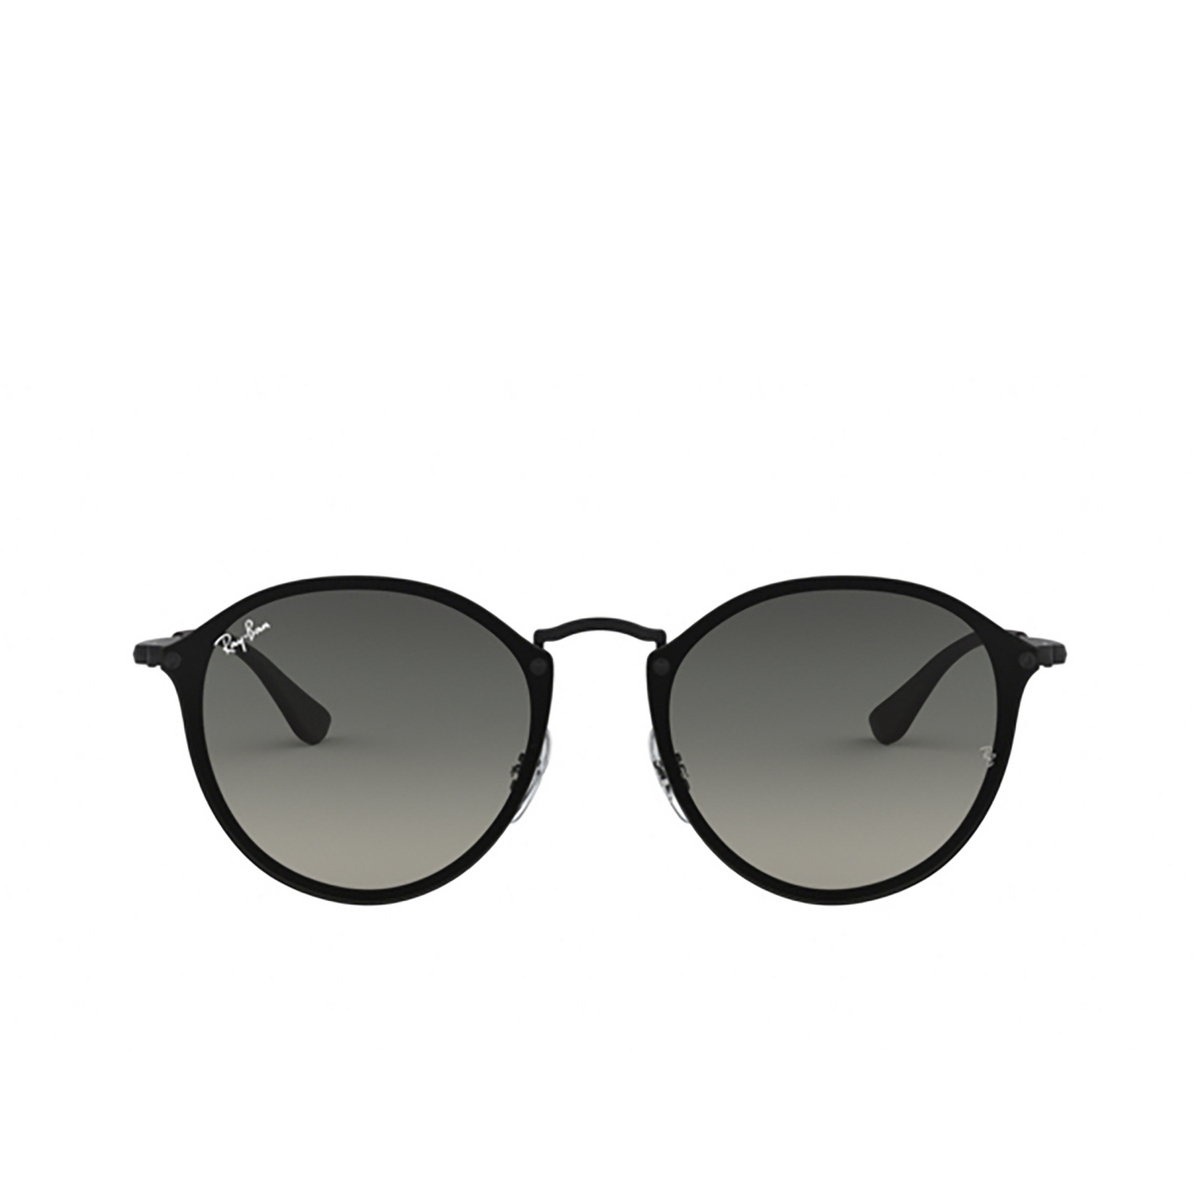 Ray-Ban BLAZE ROUND Sunglasses 153/11 BLACK - front view